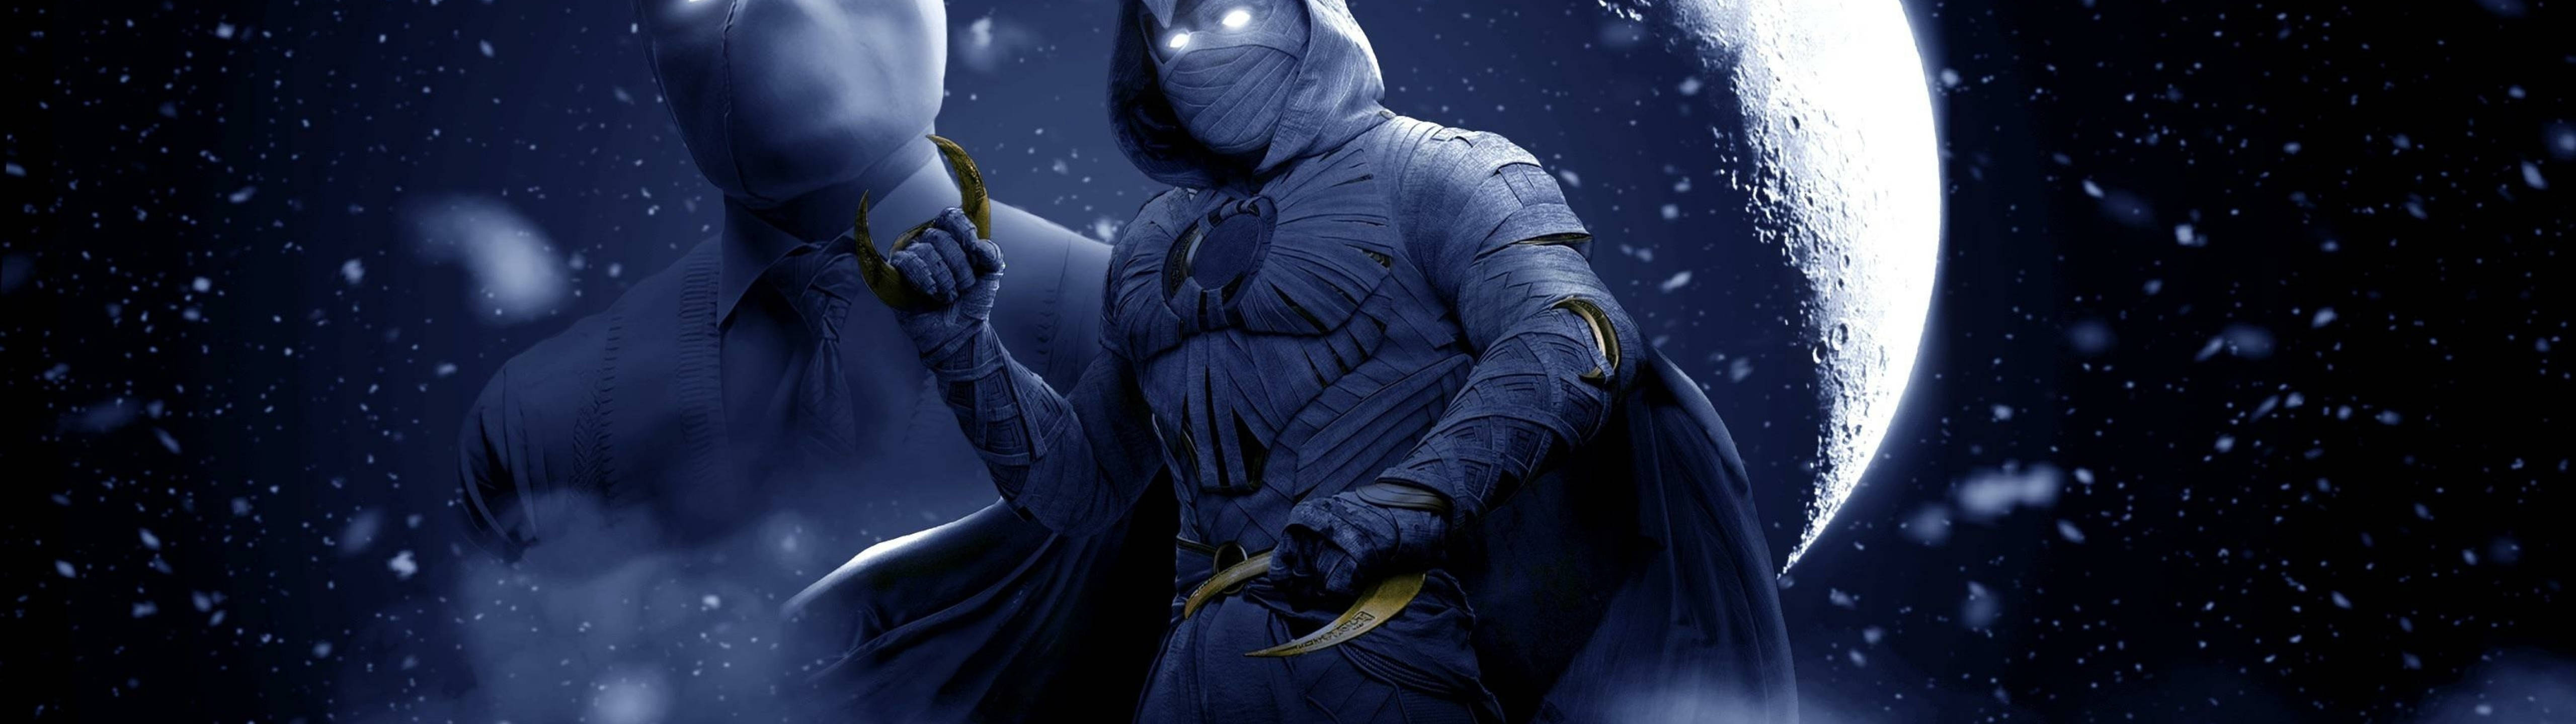 Marvel's Moon Knight 5120 X 1440 Background